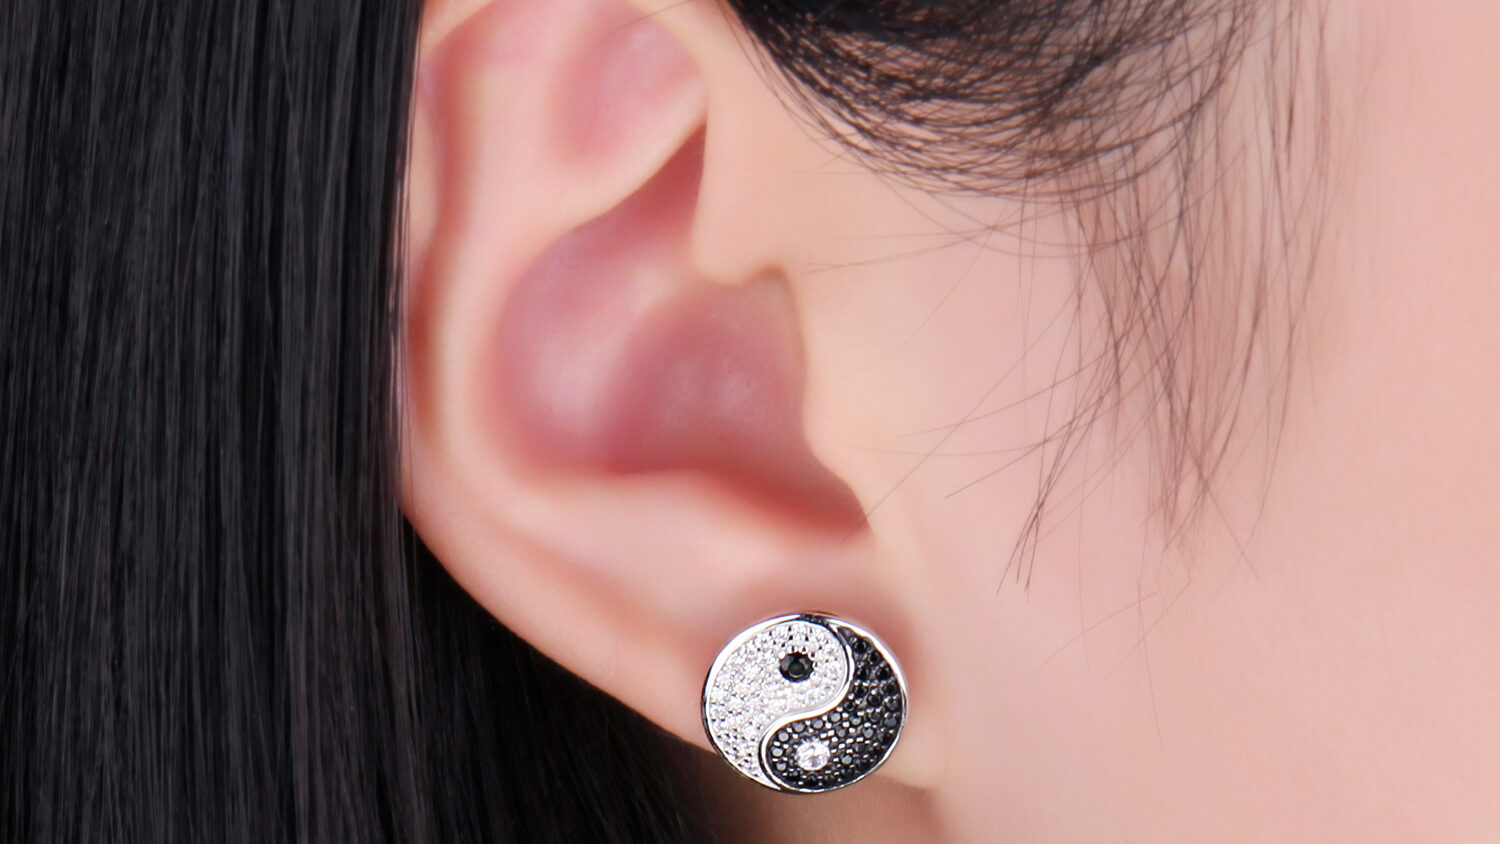 yin yang bracelets and ear studs